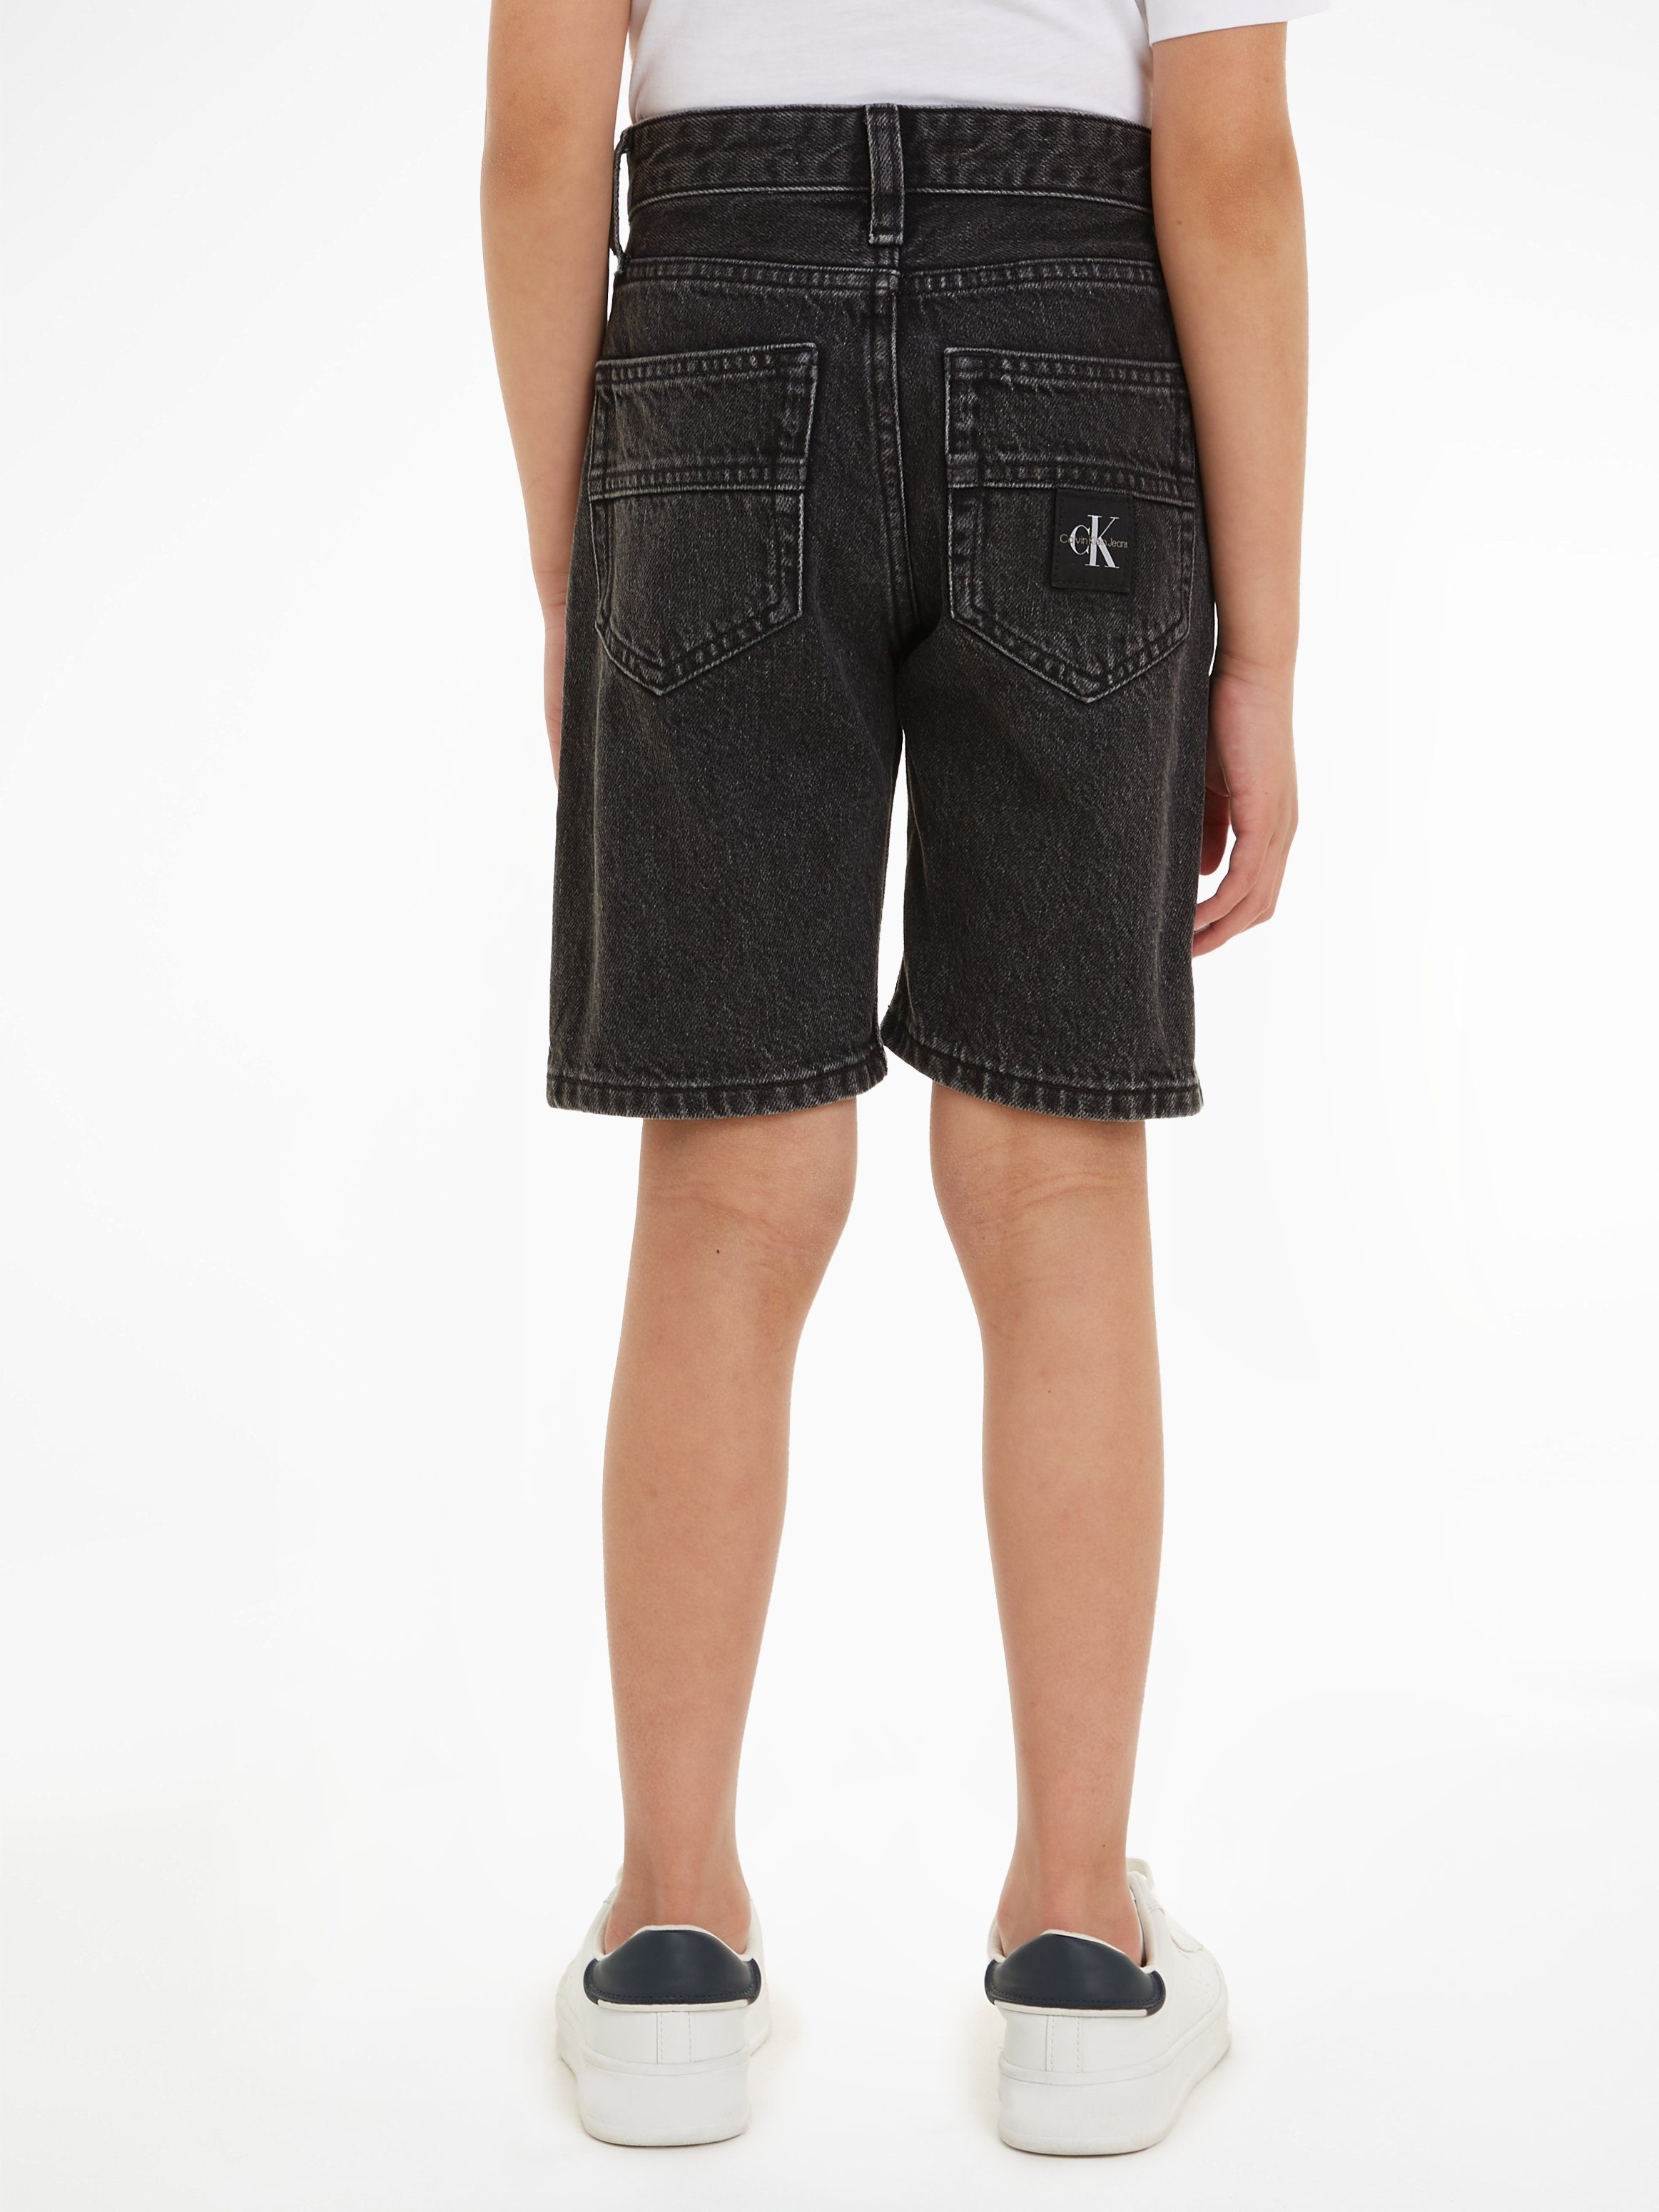 Calvin Klein RELAXED 5-Poket-Style DENIM Shorts Jeans SHORTS im